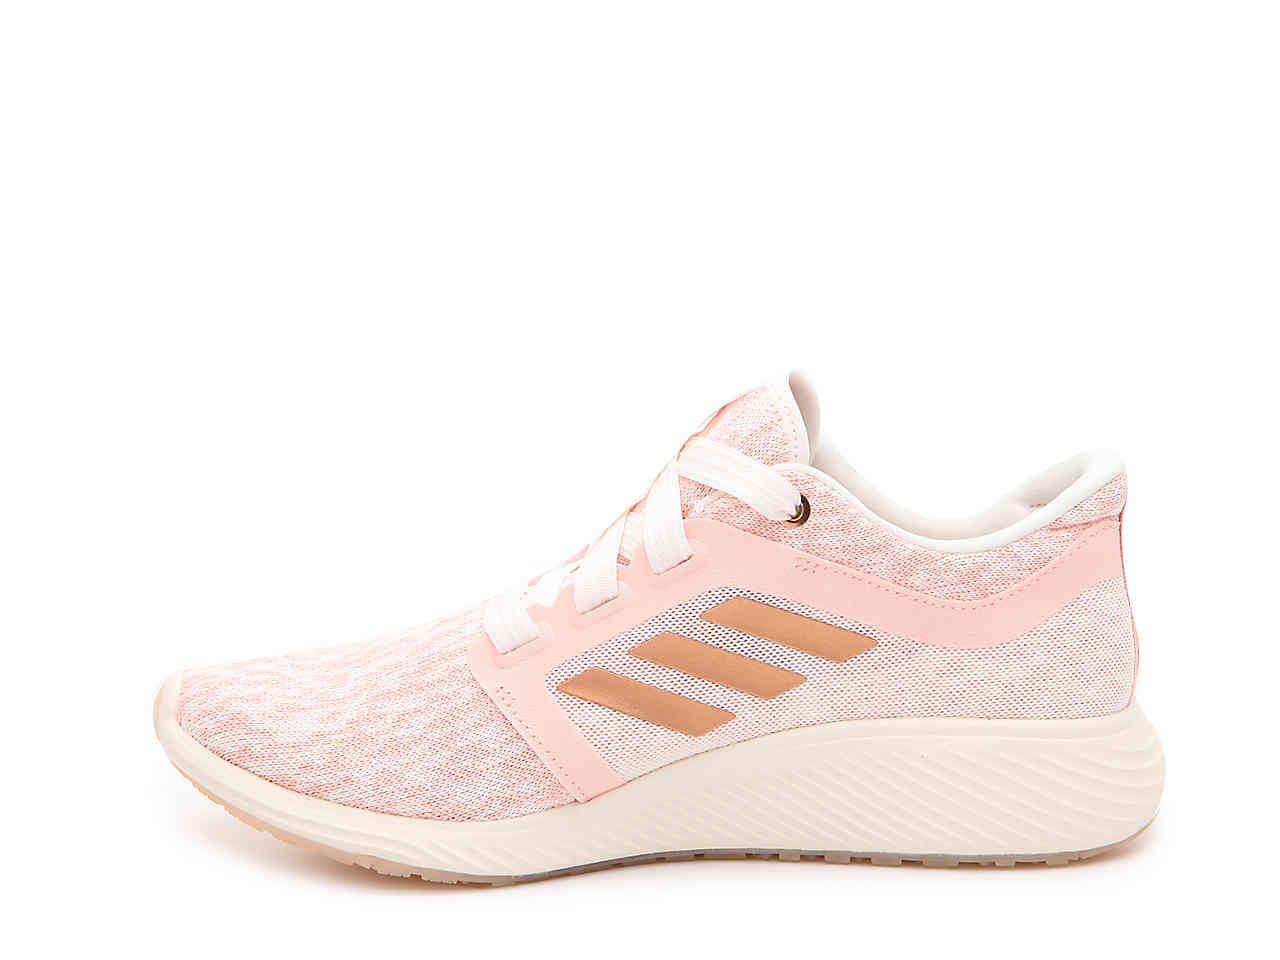 adidas edge lux 3 light pink